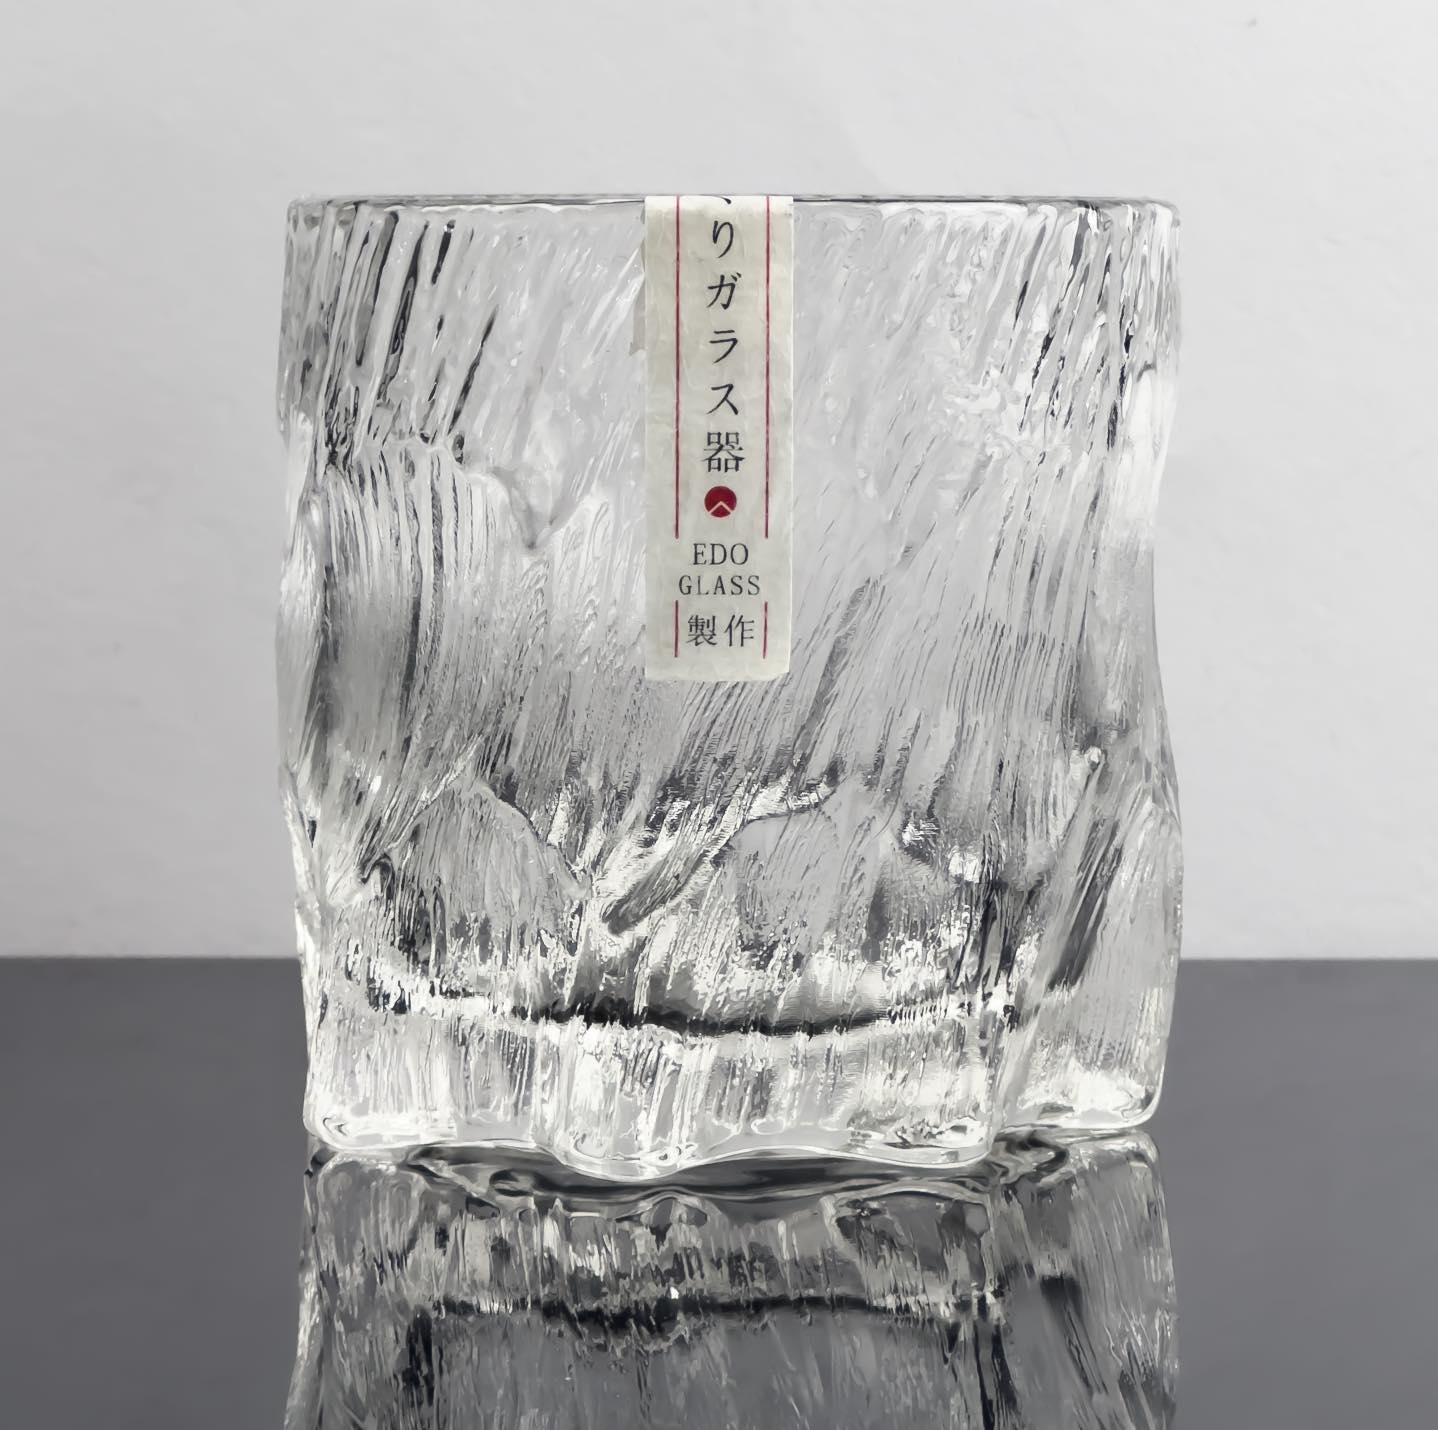 Dragon Claw Japanese Whisky whiskey Glass Solkatt Designs